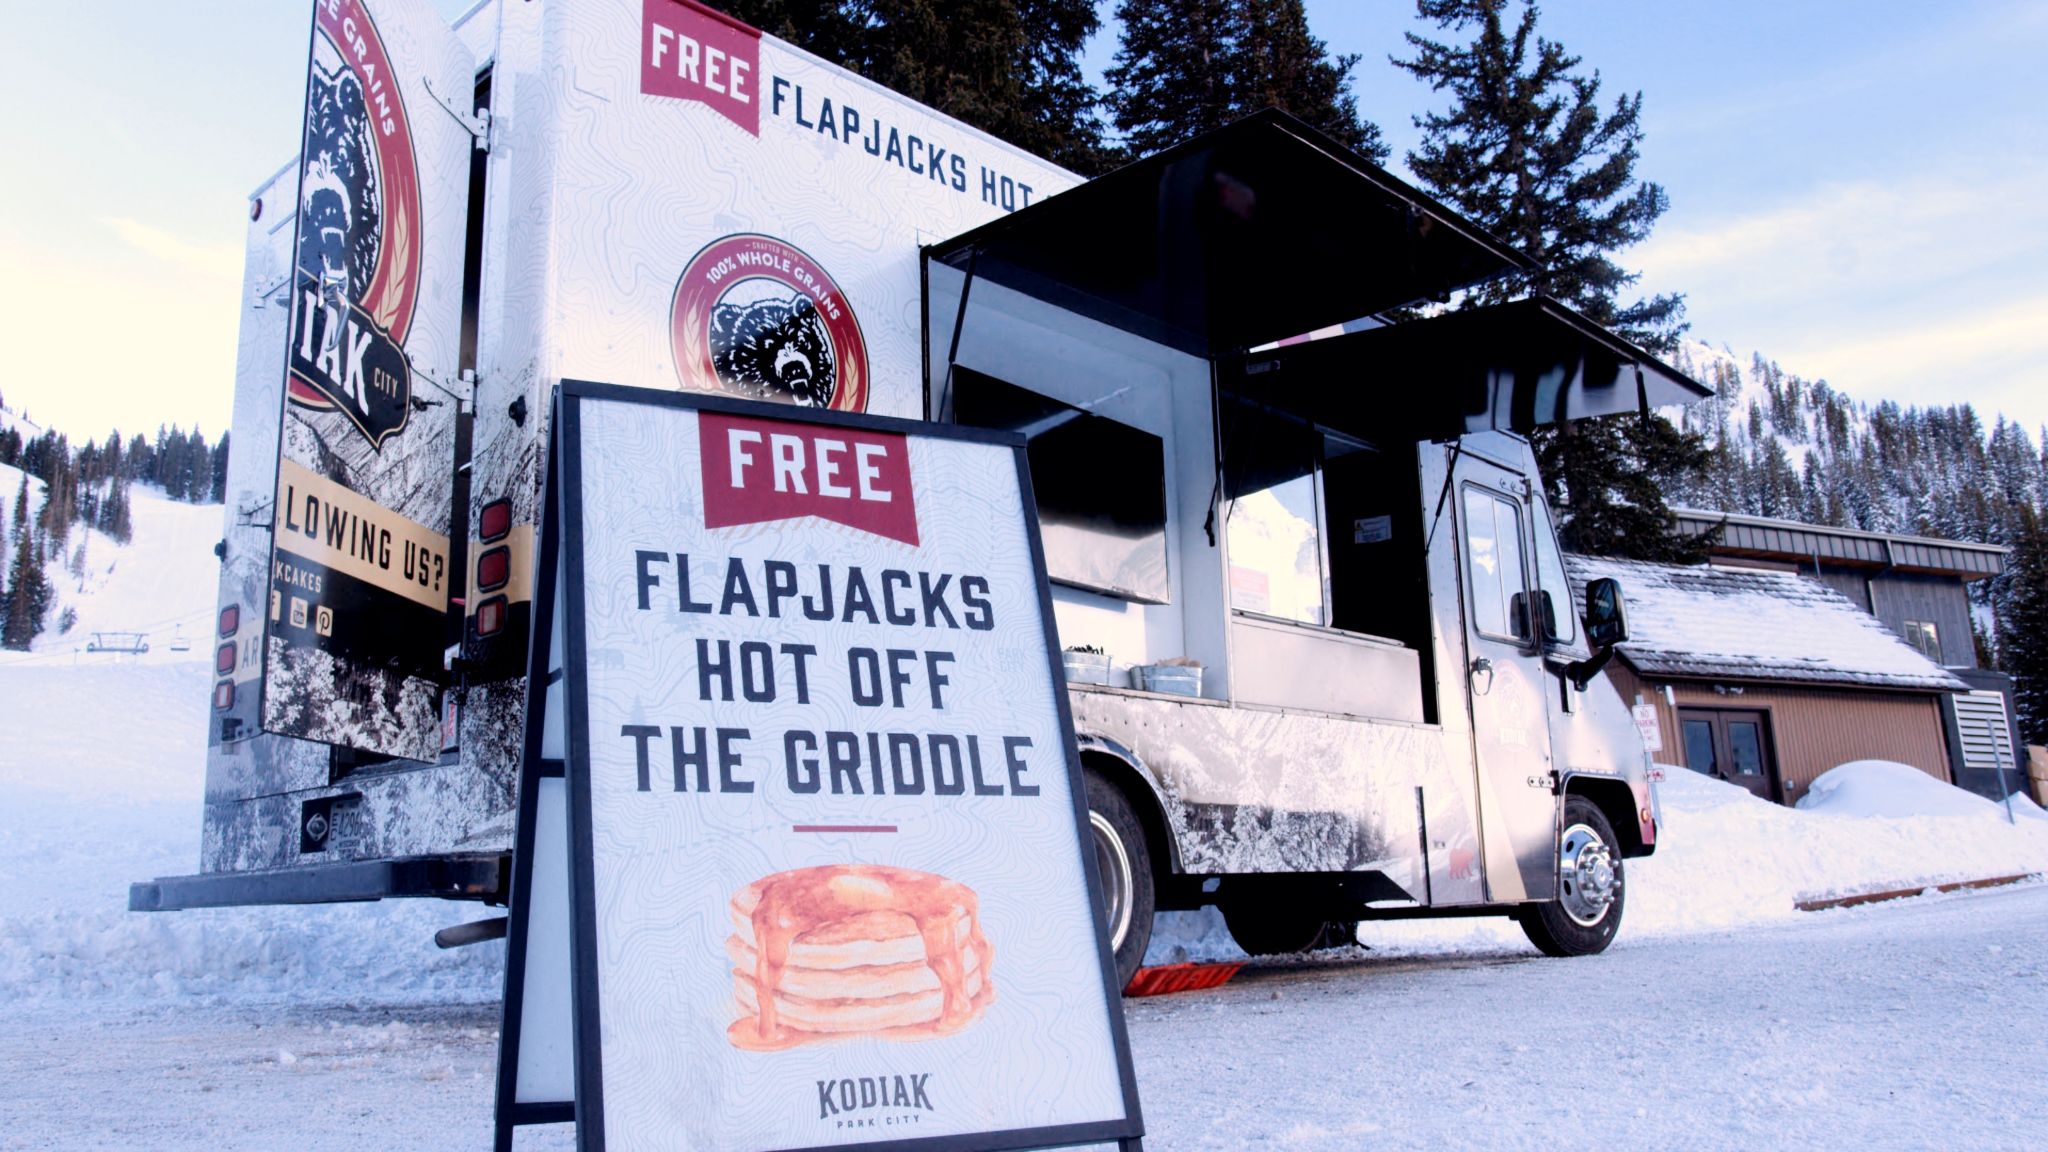 IU C&I Studios Portfolio Newbridge Marketing Kodiak Cakes View of company van and ad for free flapjacks in front of it